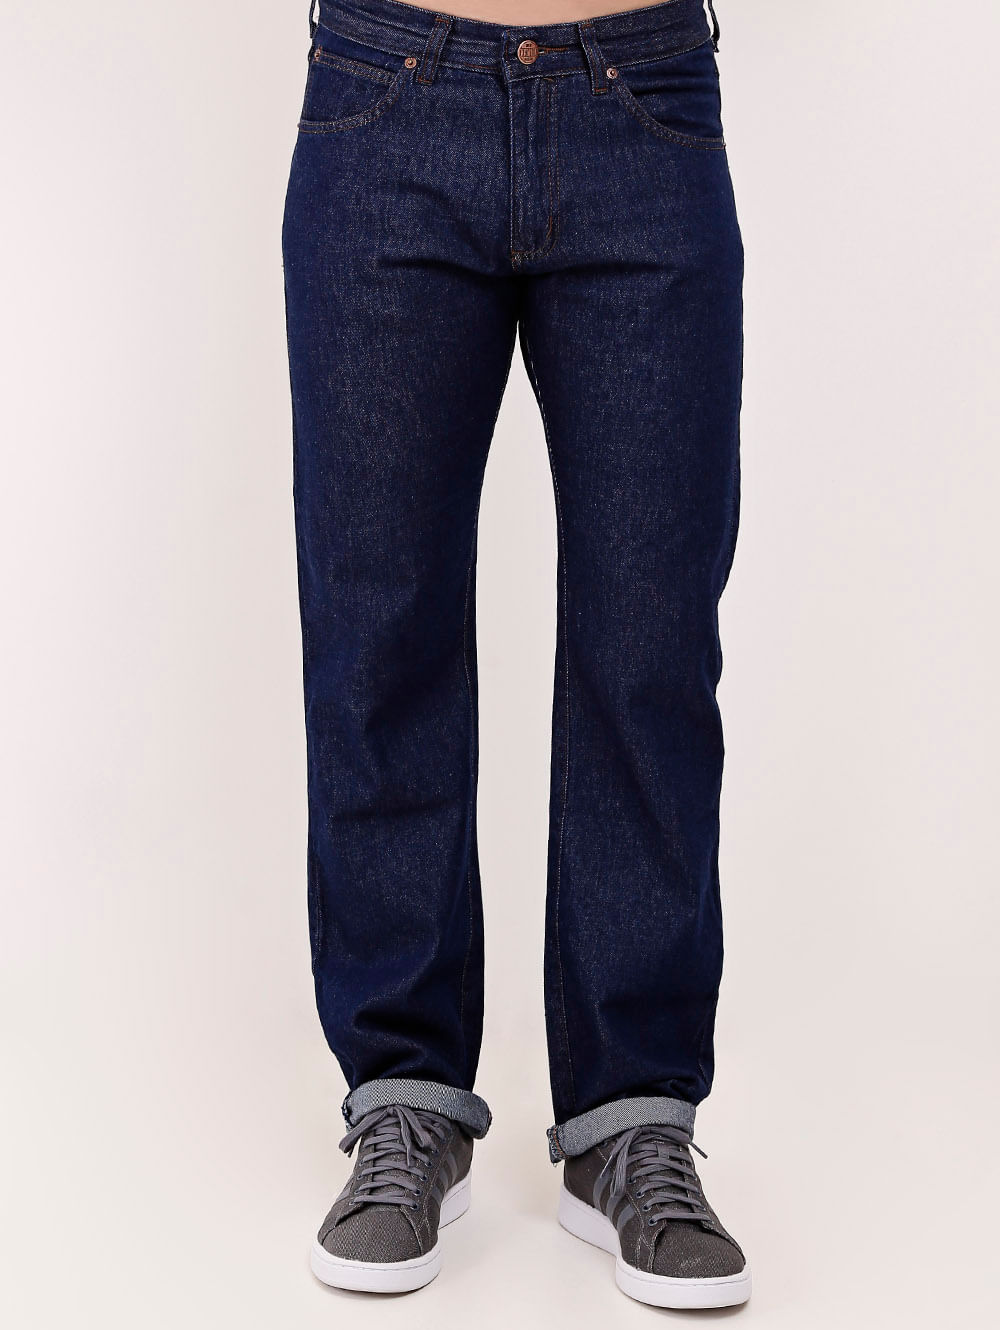 calças jeans tradicional masculina